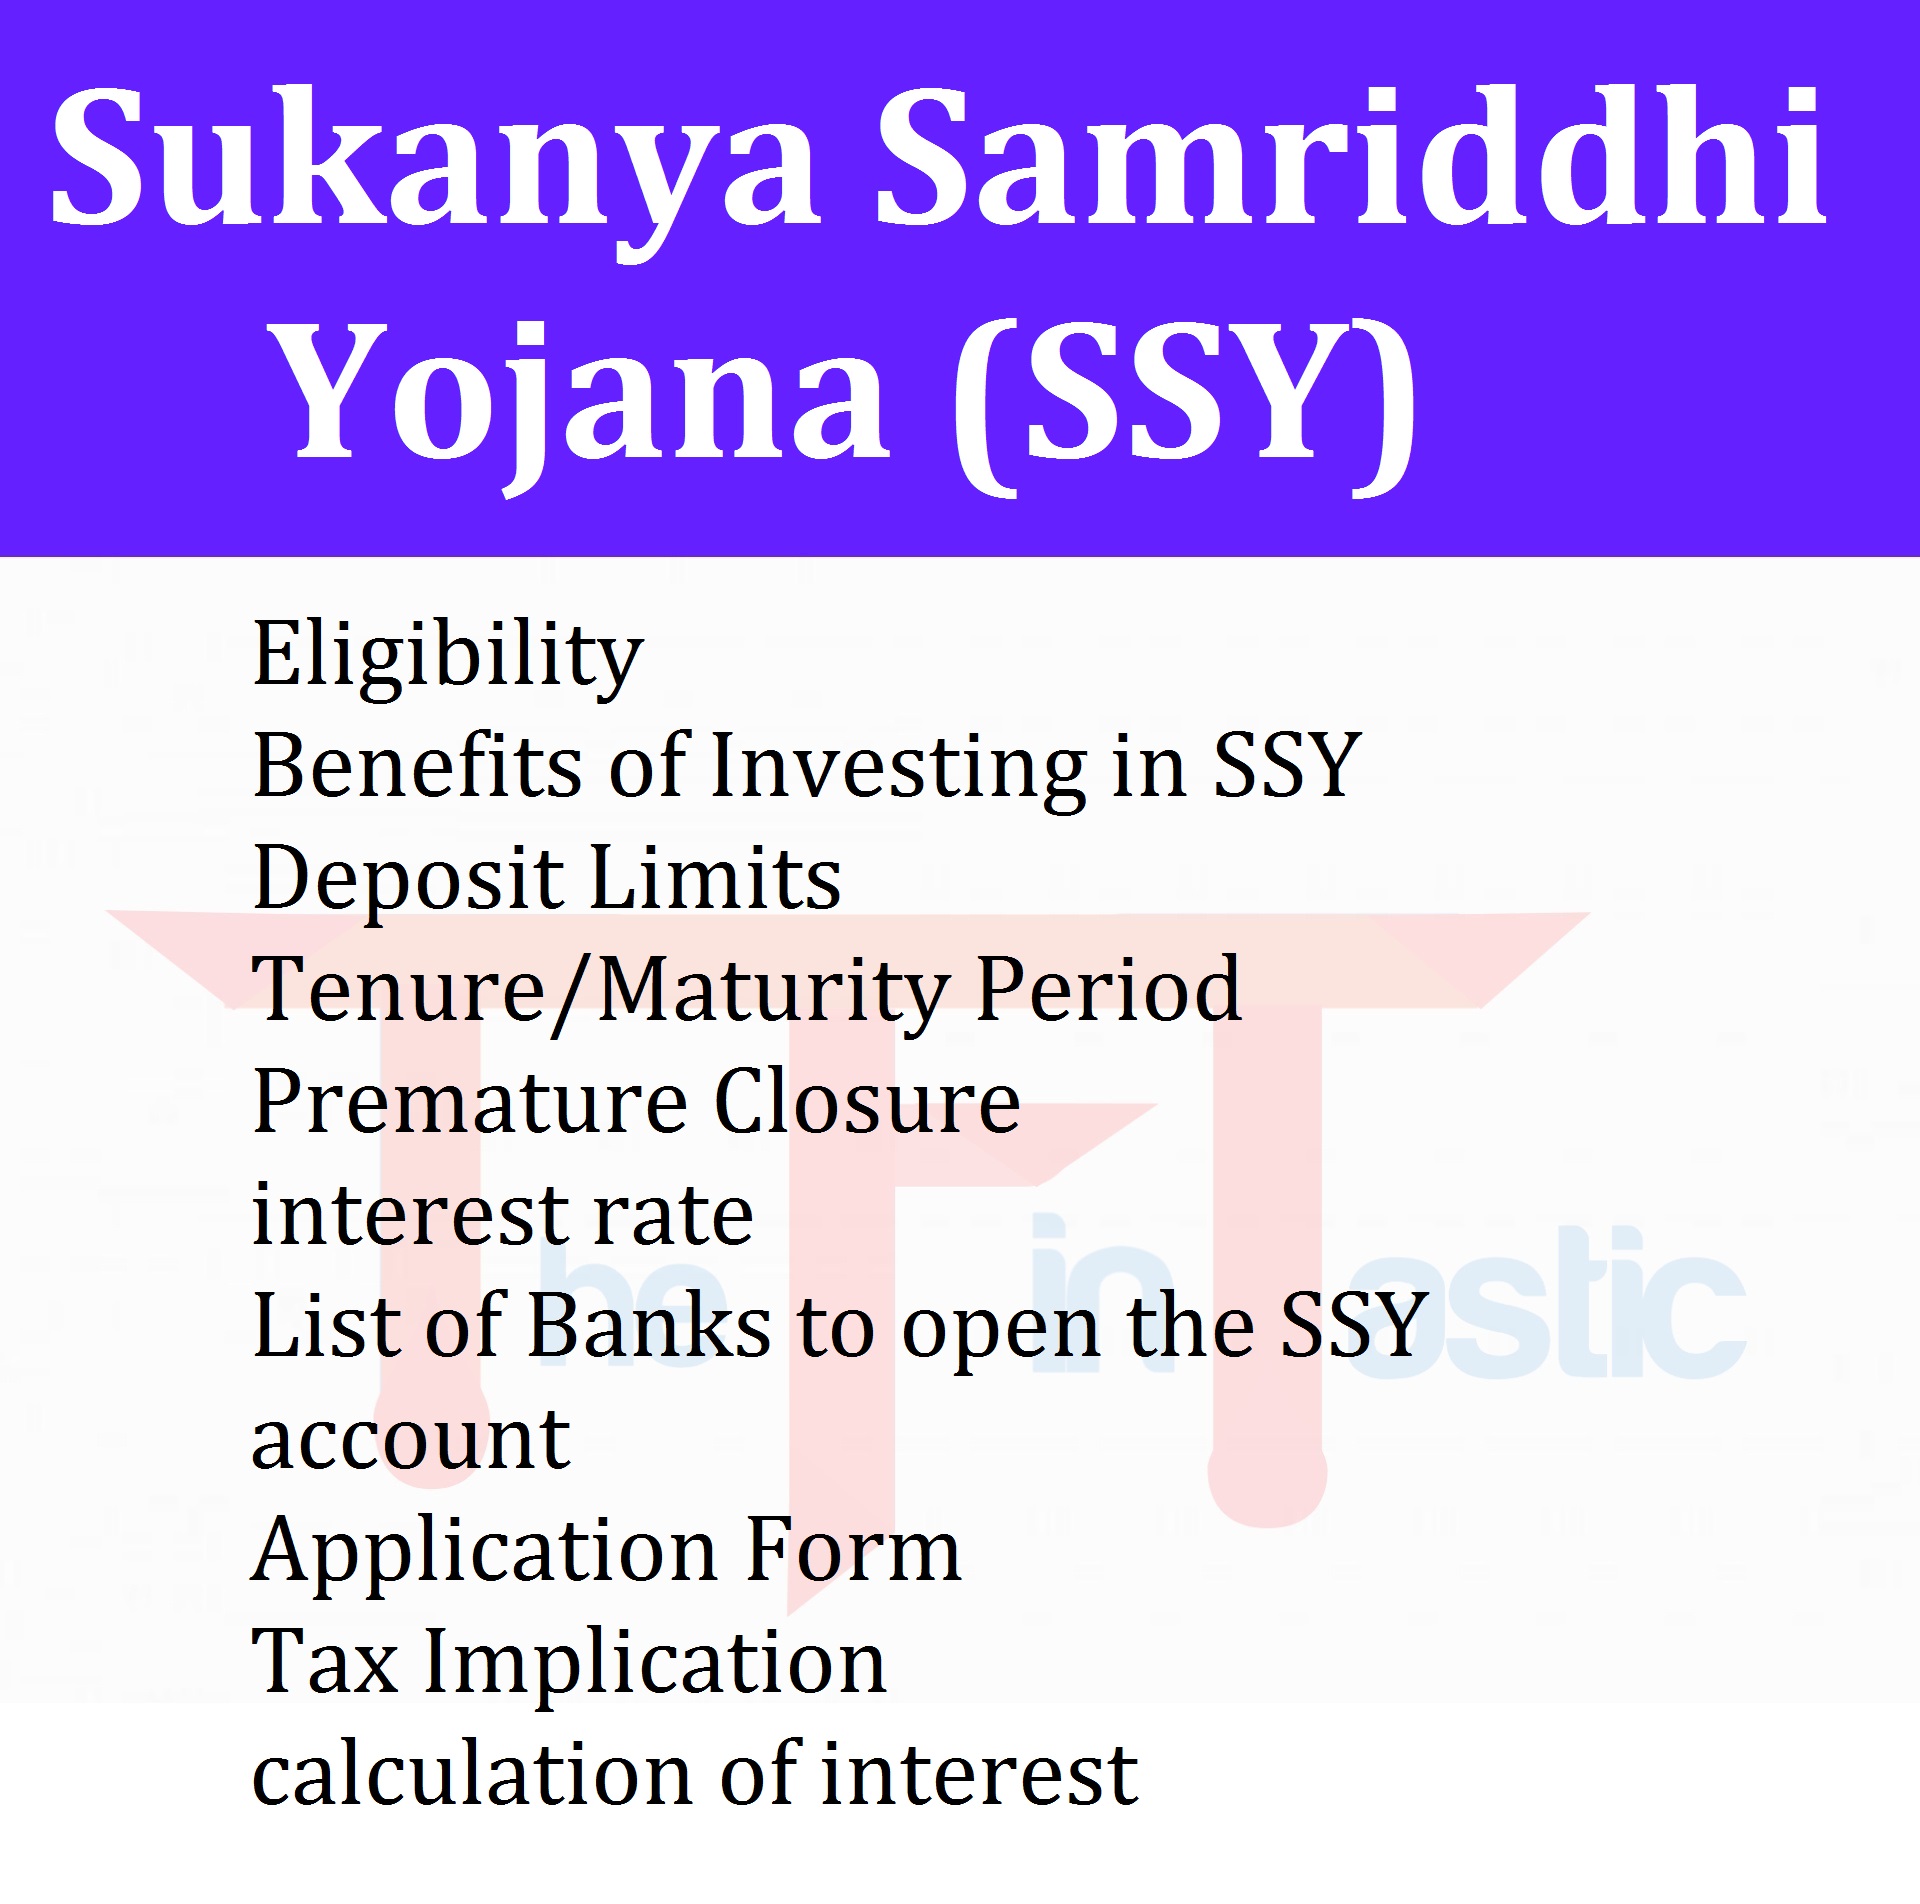 Sukanya Samriddhi Yojana (SSY) - Eligibility, Benefits, Features, Interest rates & List of Banks for SSY account